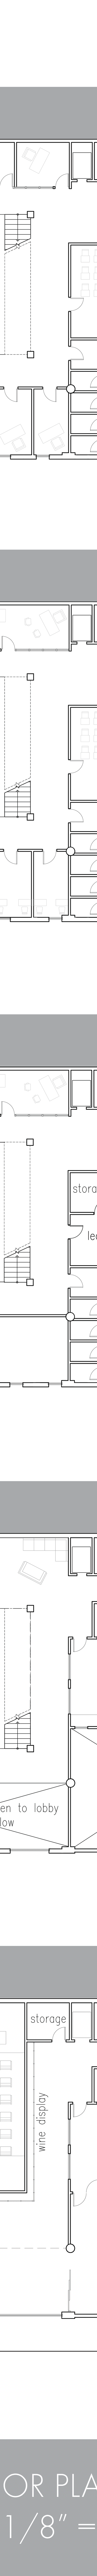 Building floorplans